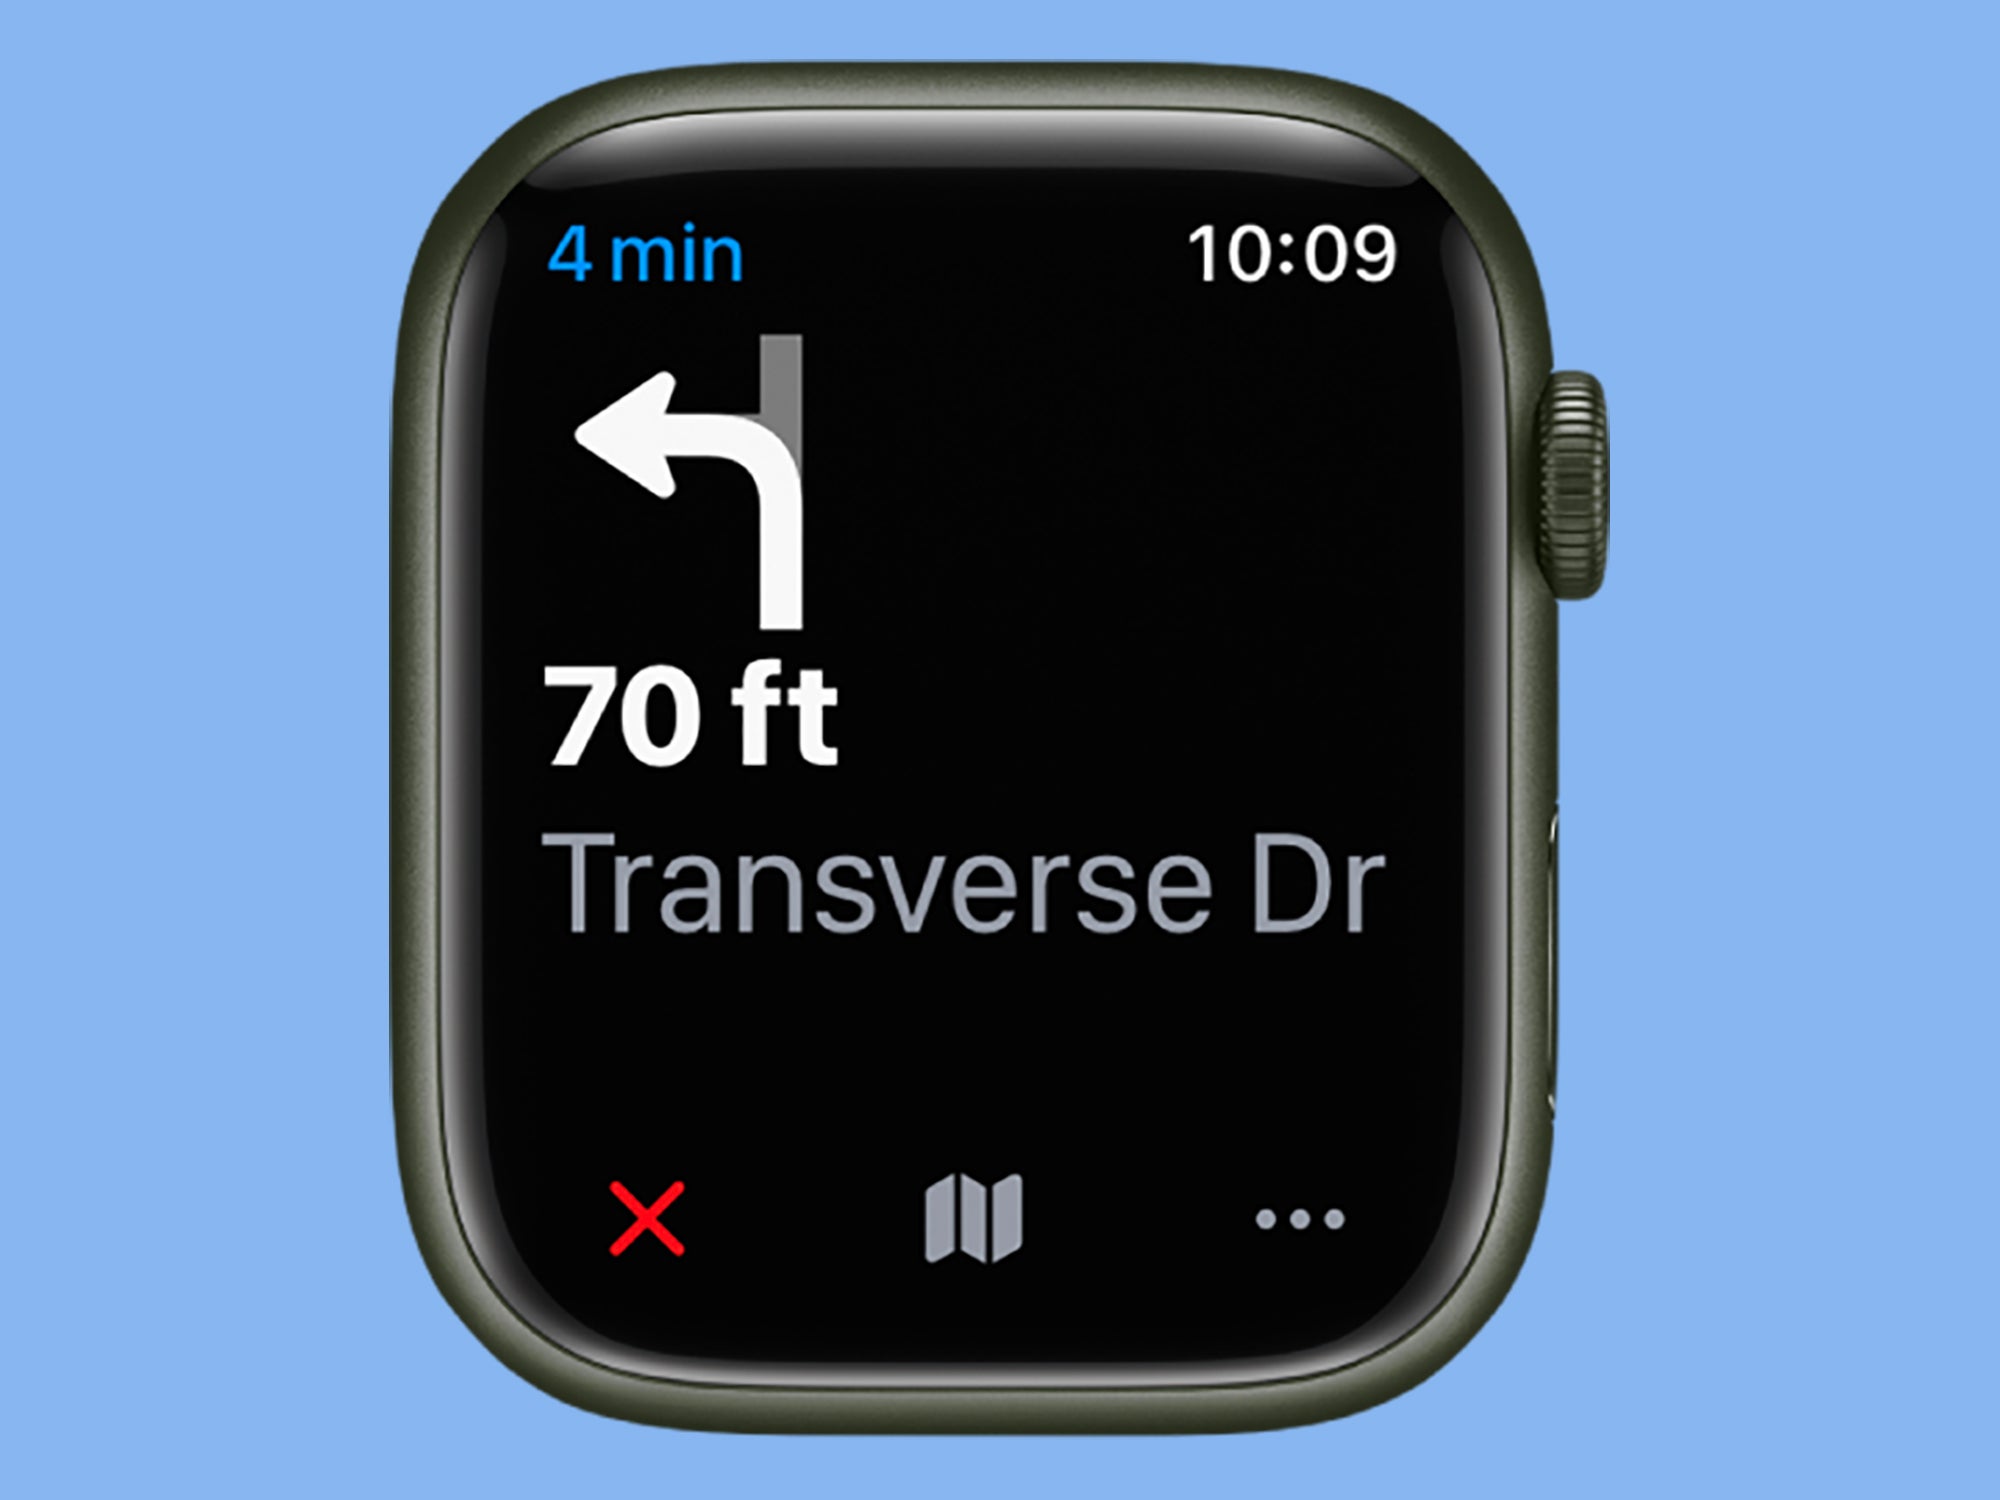 An Apple Watch Maps navigation screen, showing a left turn onto Transverse Drive in 70 feet.